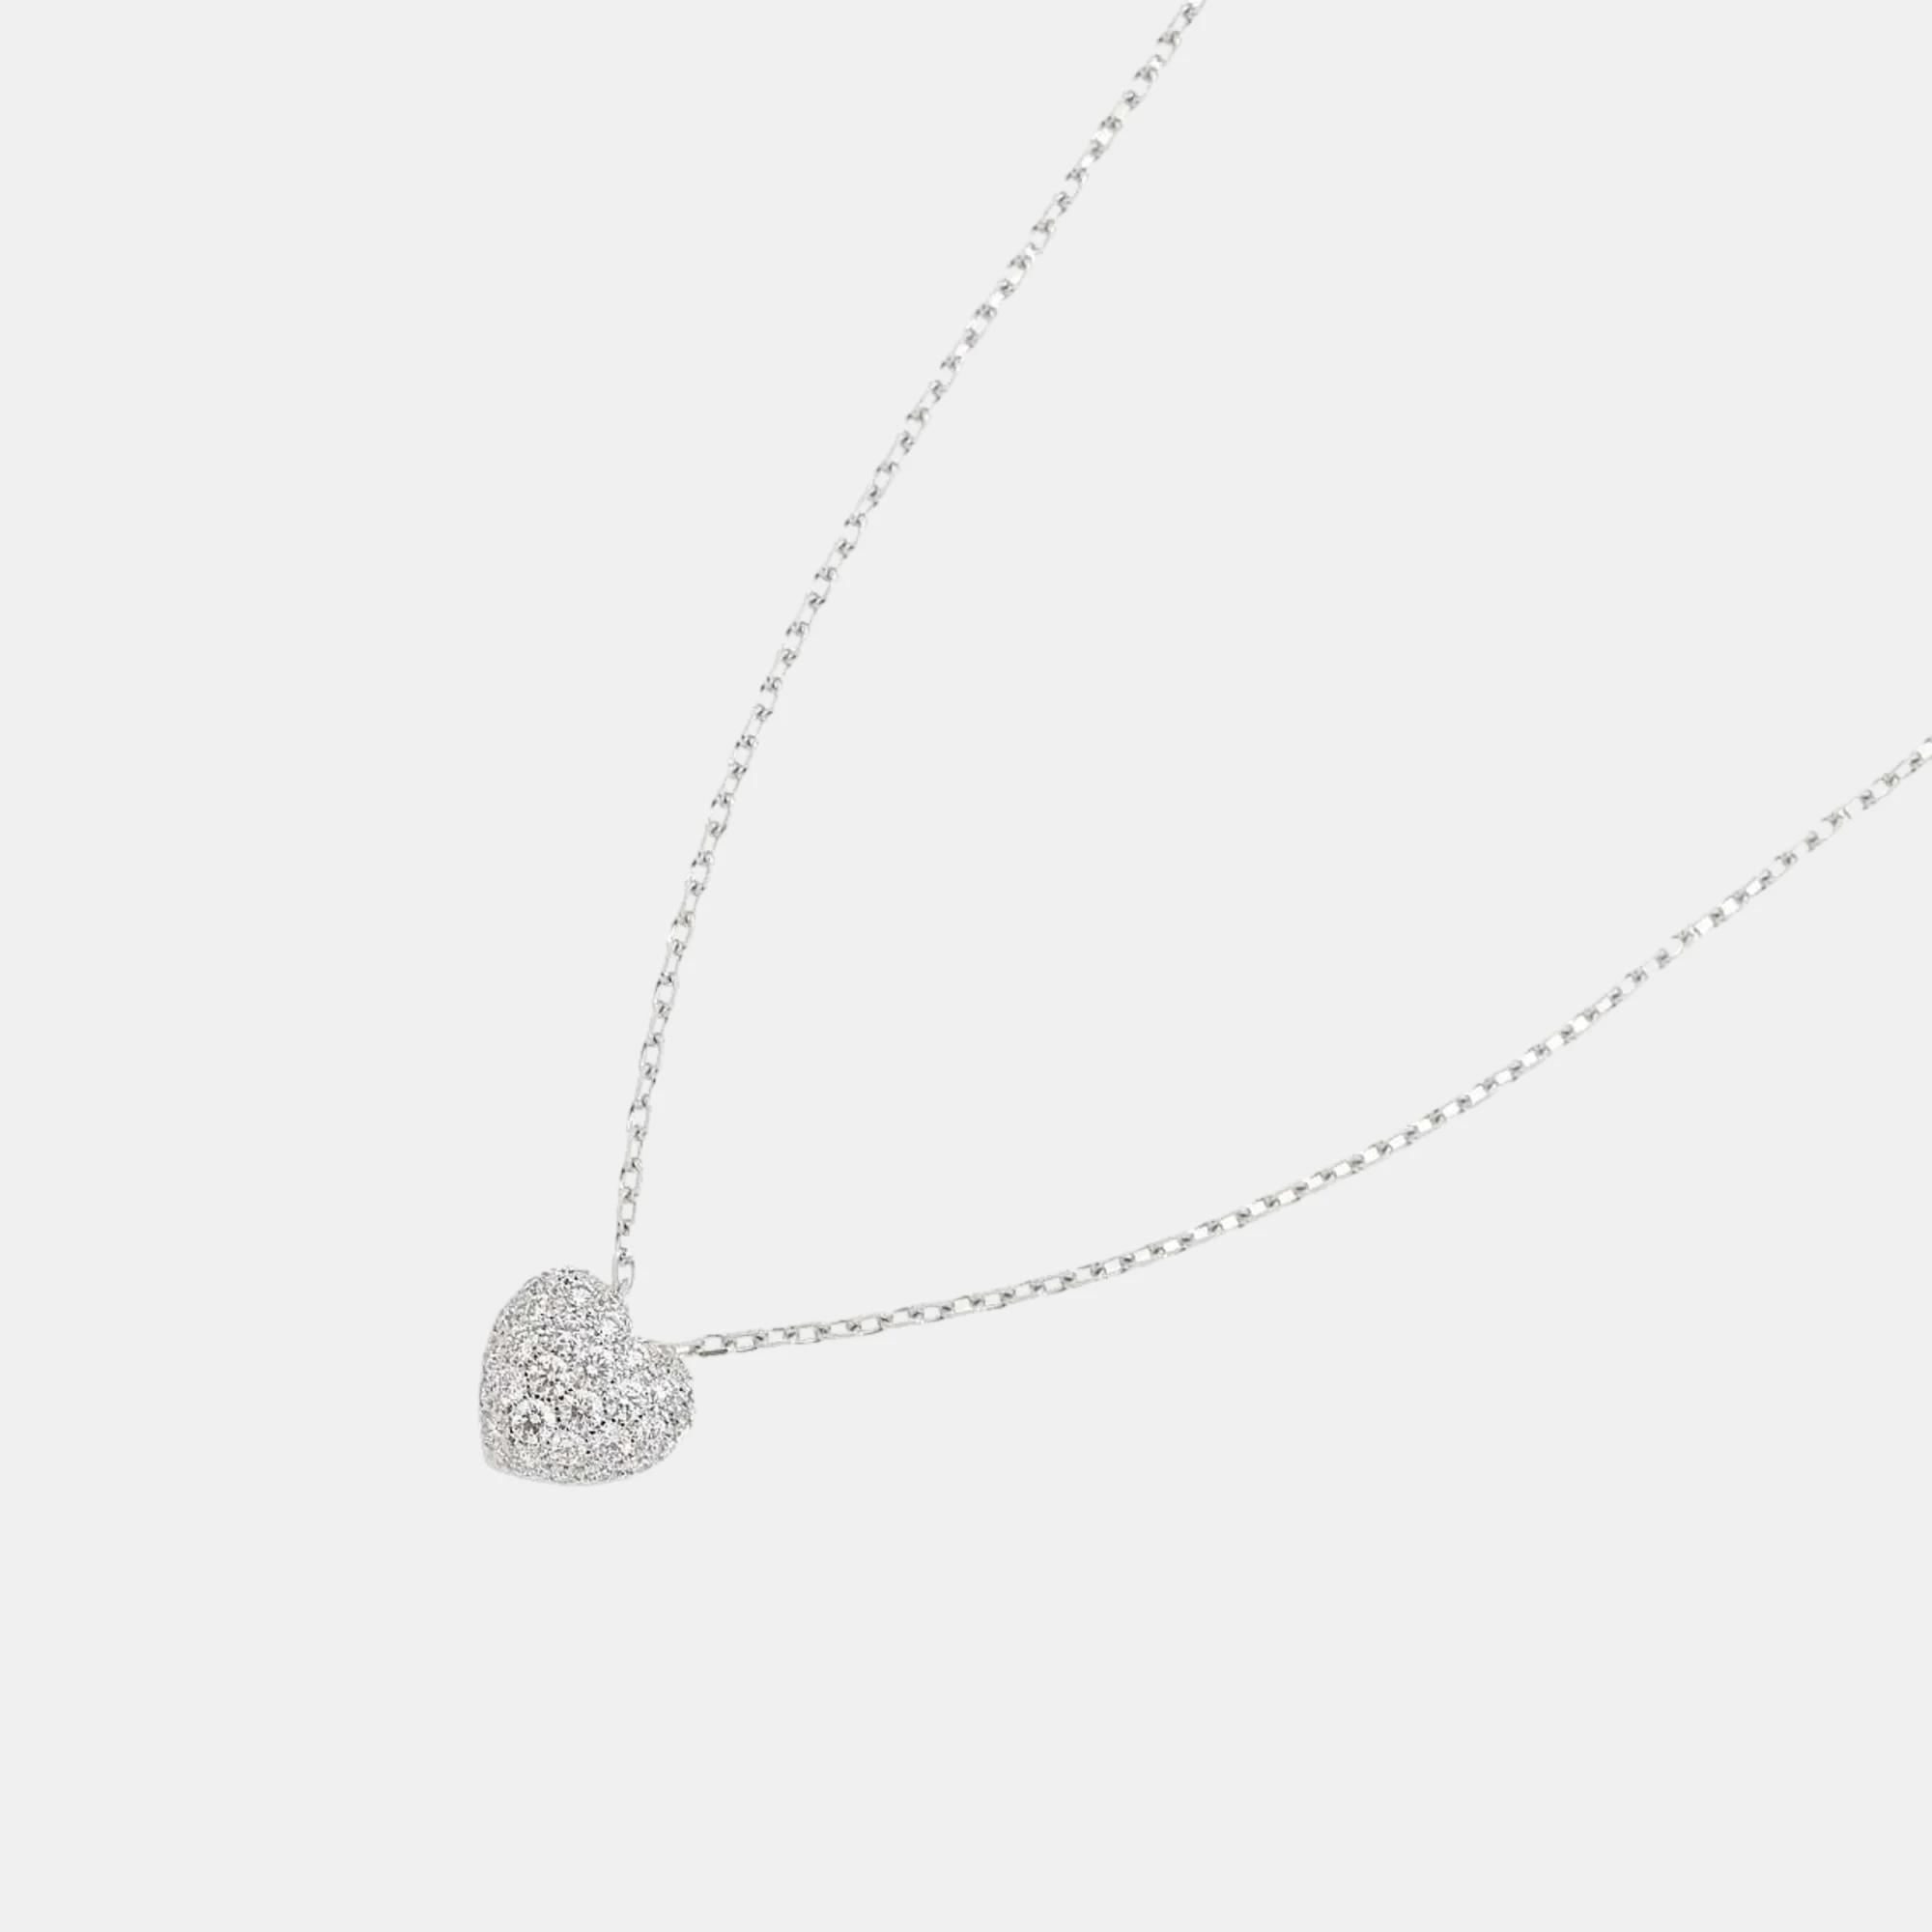 Cartier 18k white gold and diamond c de cartier heart pendant necklace